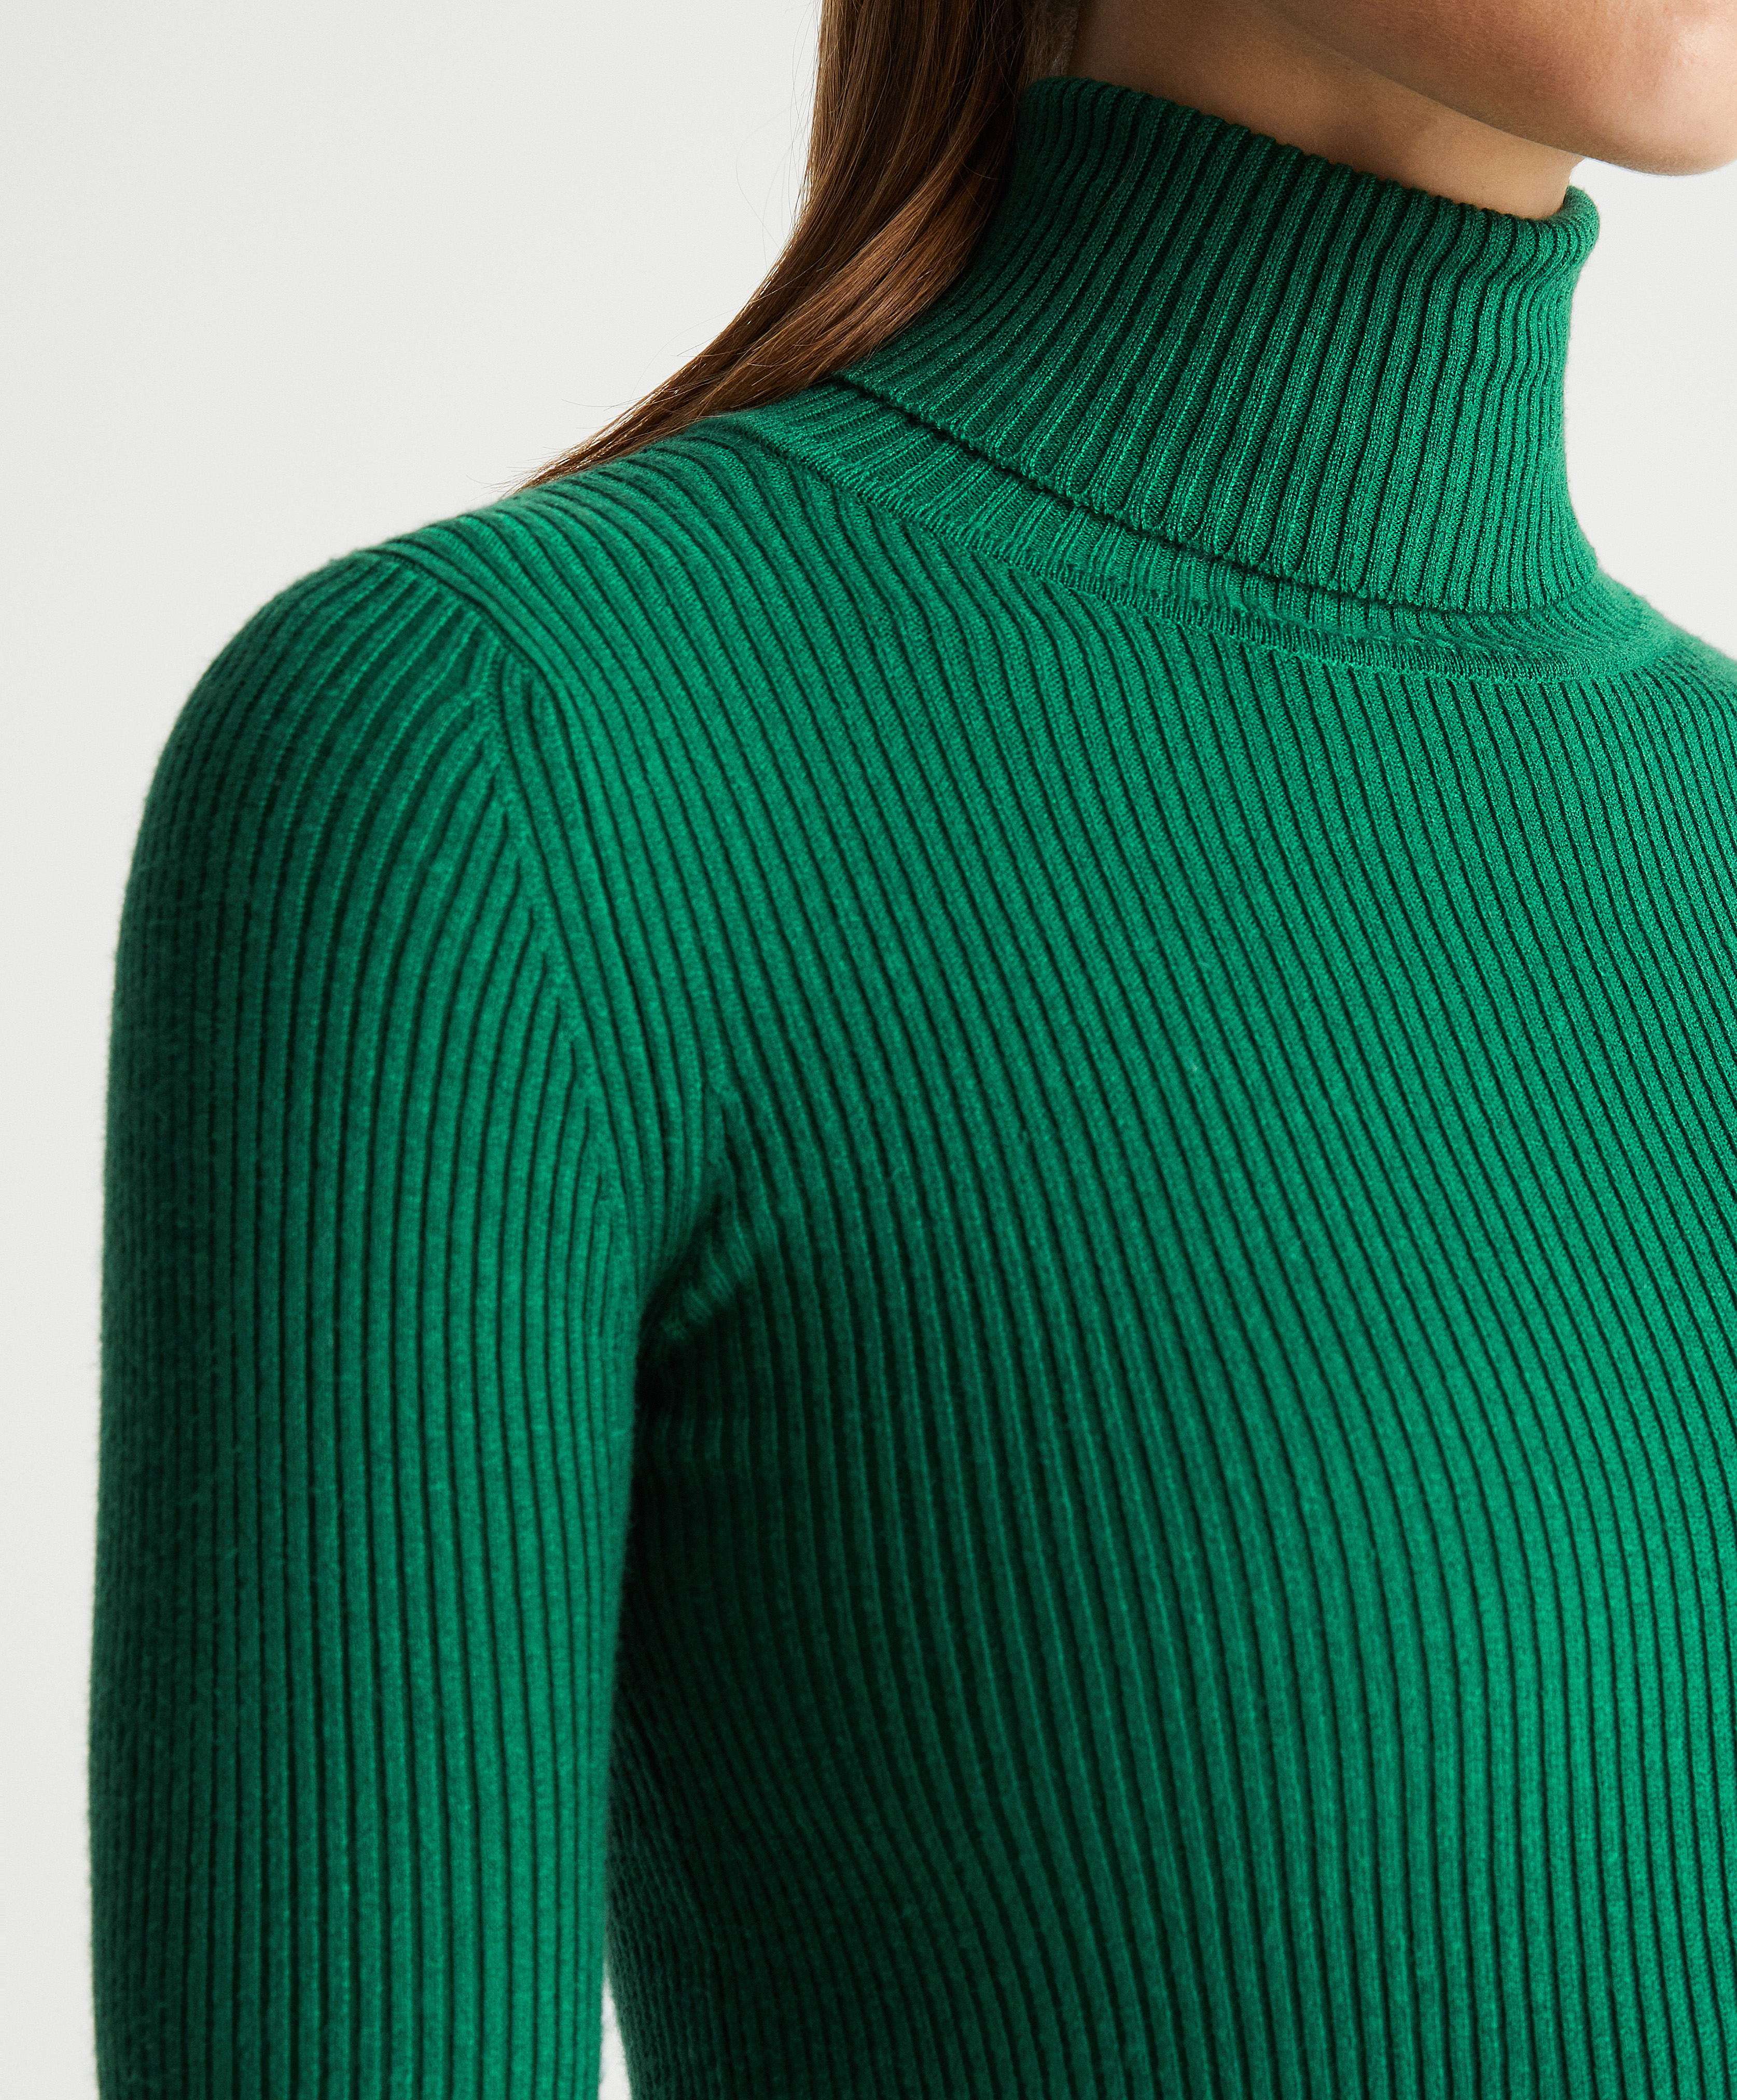 High neck sweater